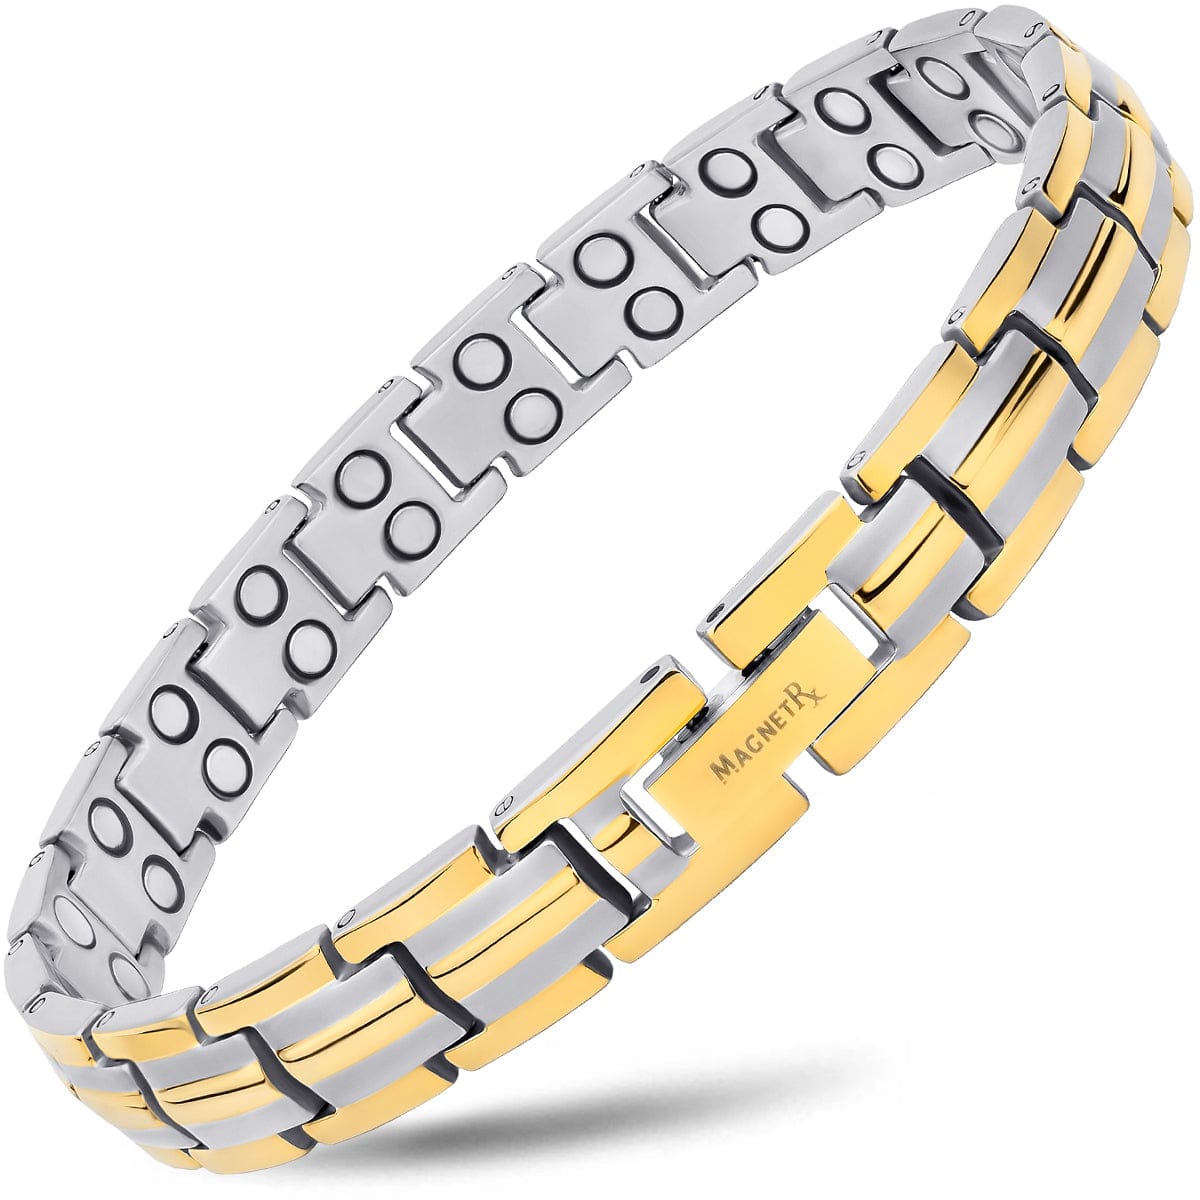 All bracelets for Arthritis – Magnetic Mobility